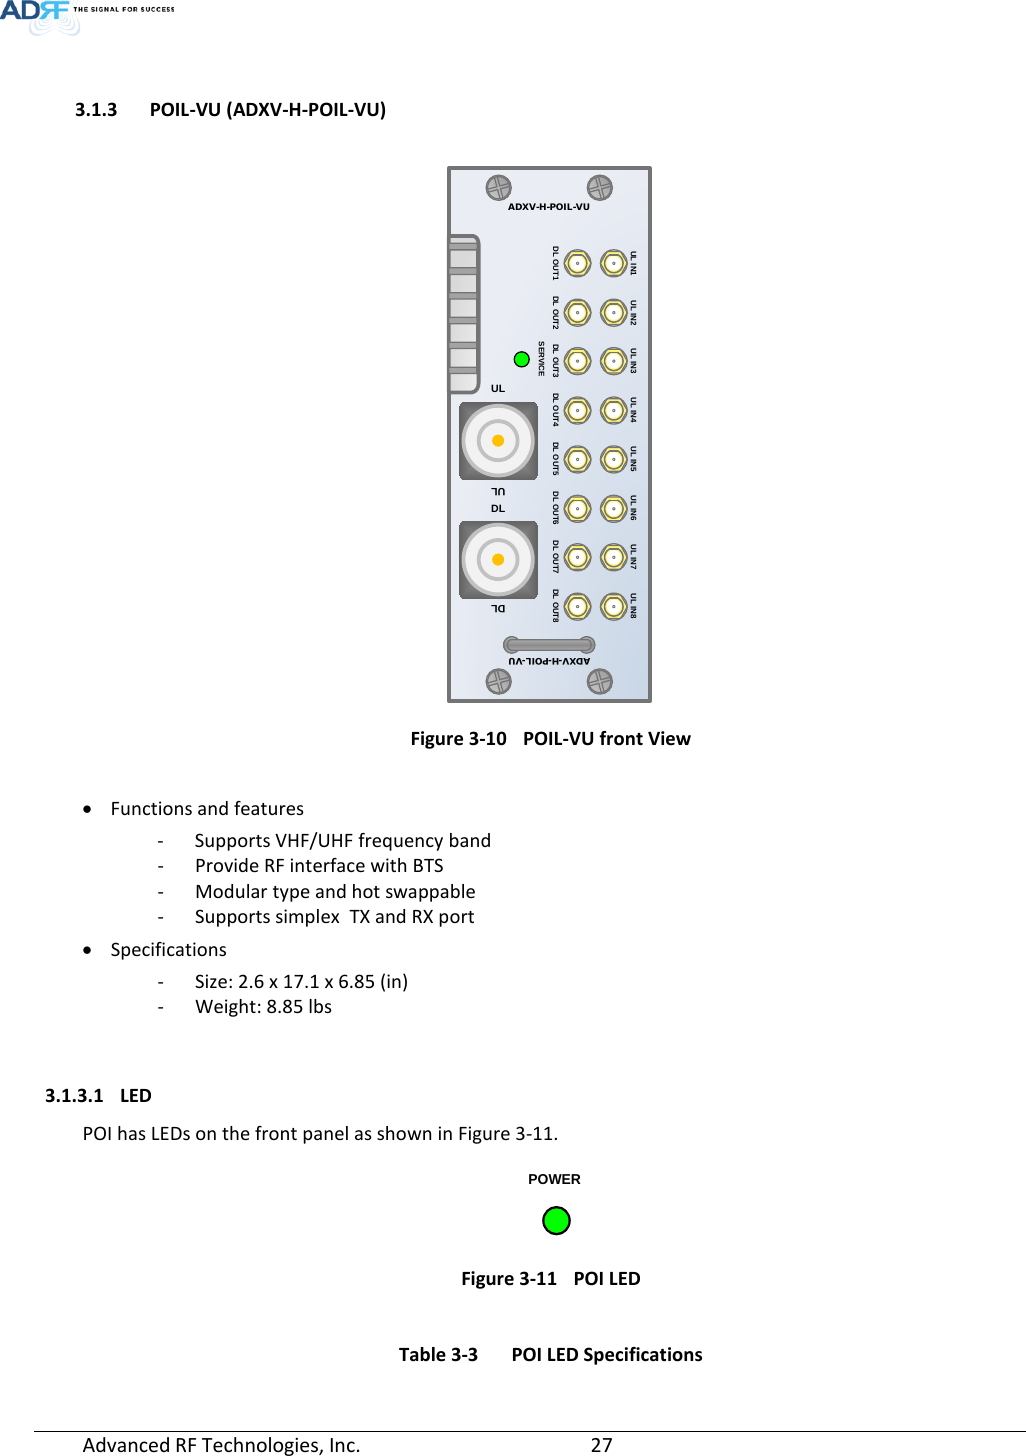 Page 27 of ADRF KOREA ADXV-R-336 DAS (Distributed Antenna System) User Manual ADXV DAS